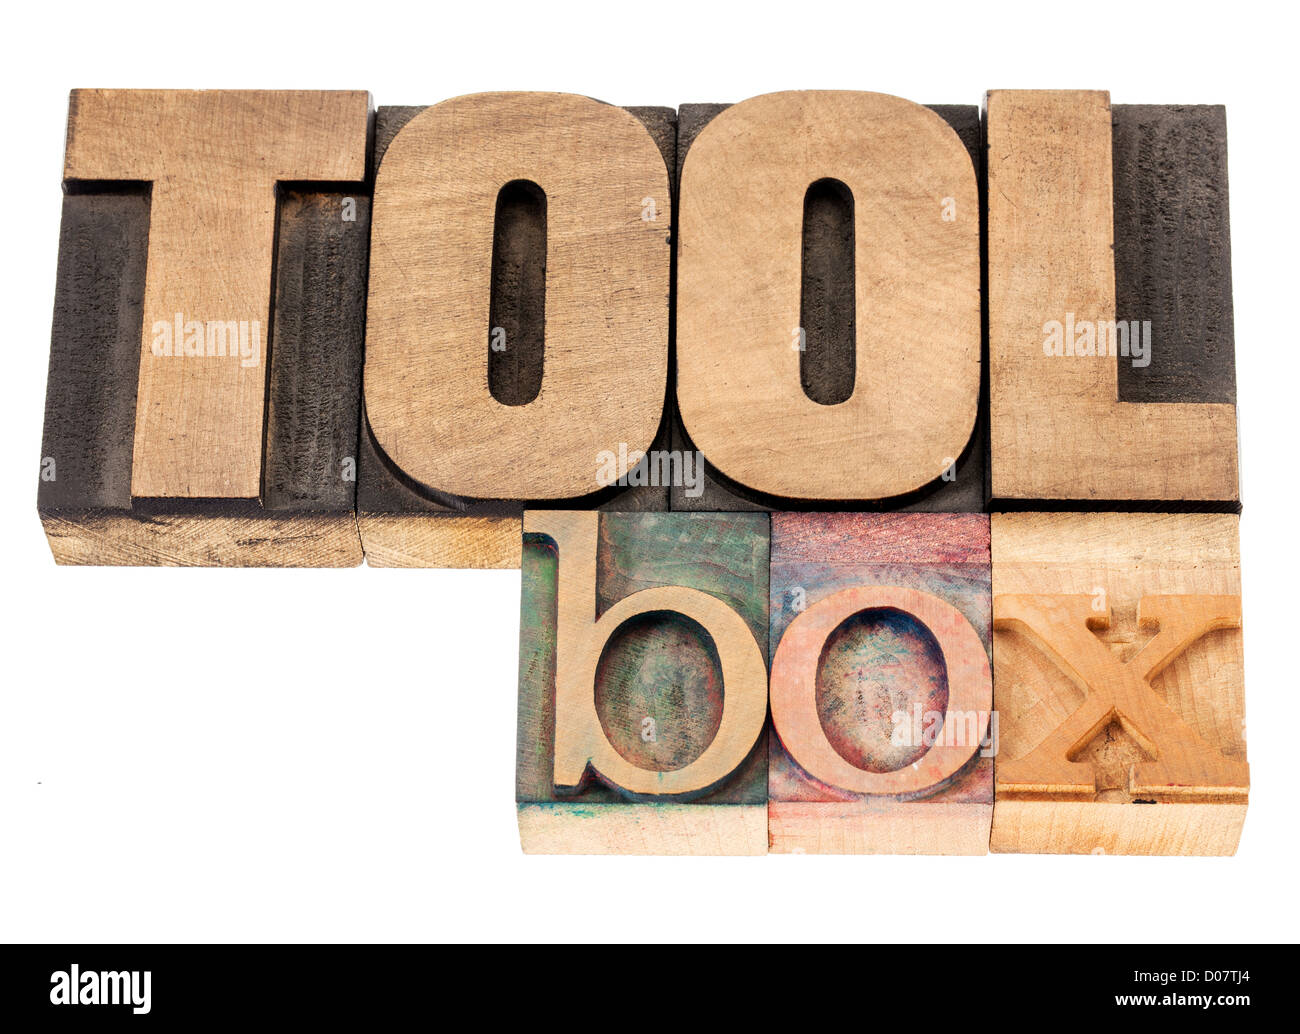 toolbox - isolated word in vintage letterpress wood type blocks Stock Photo